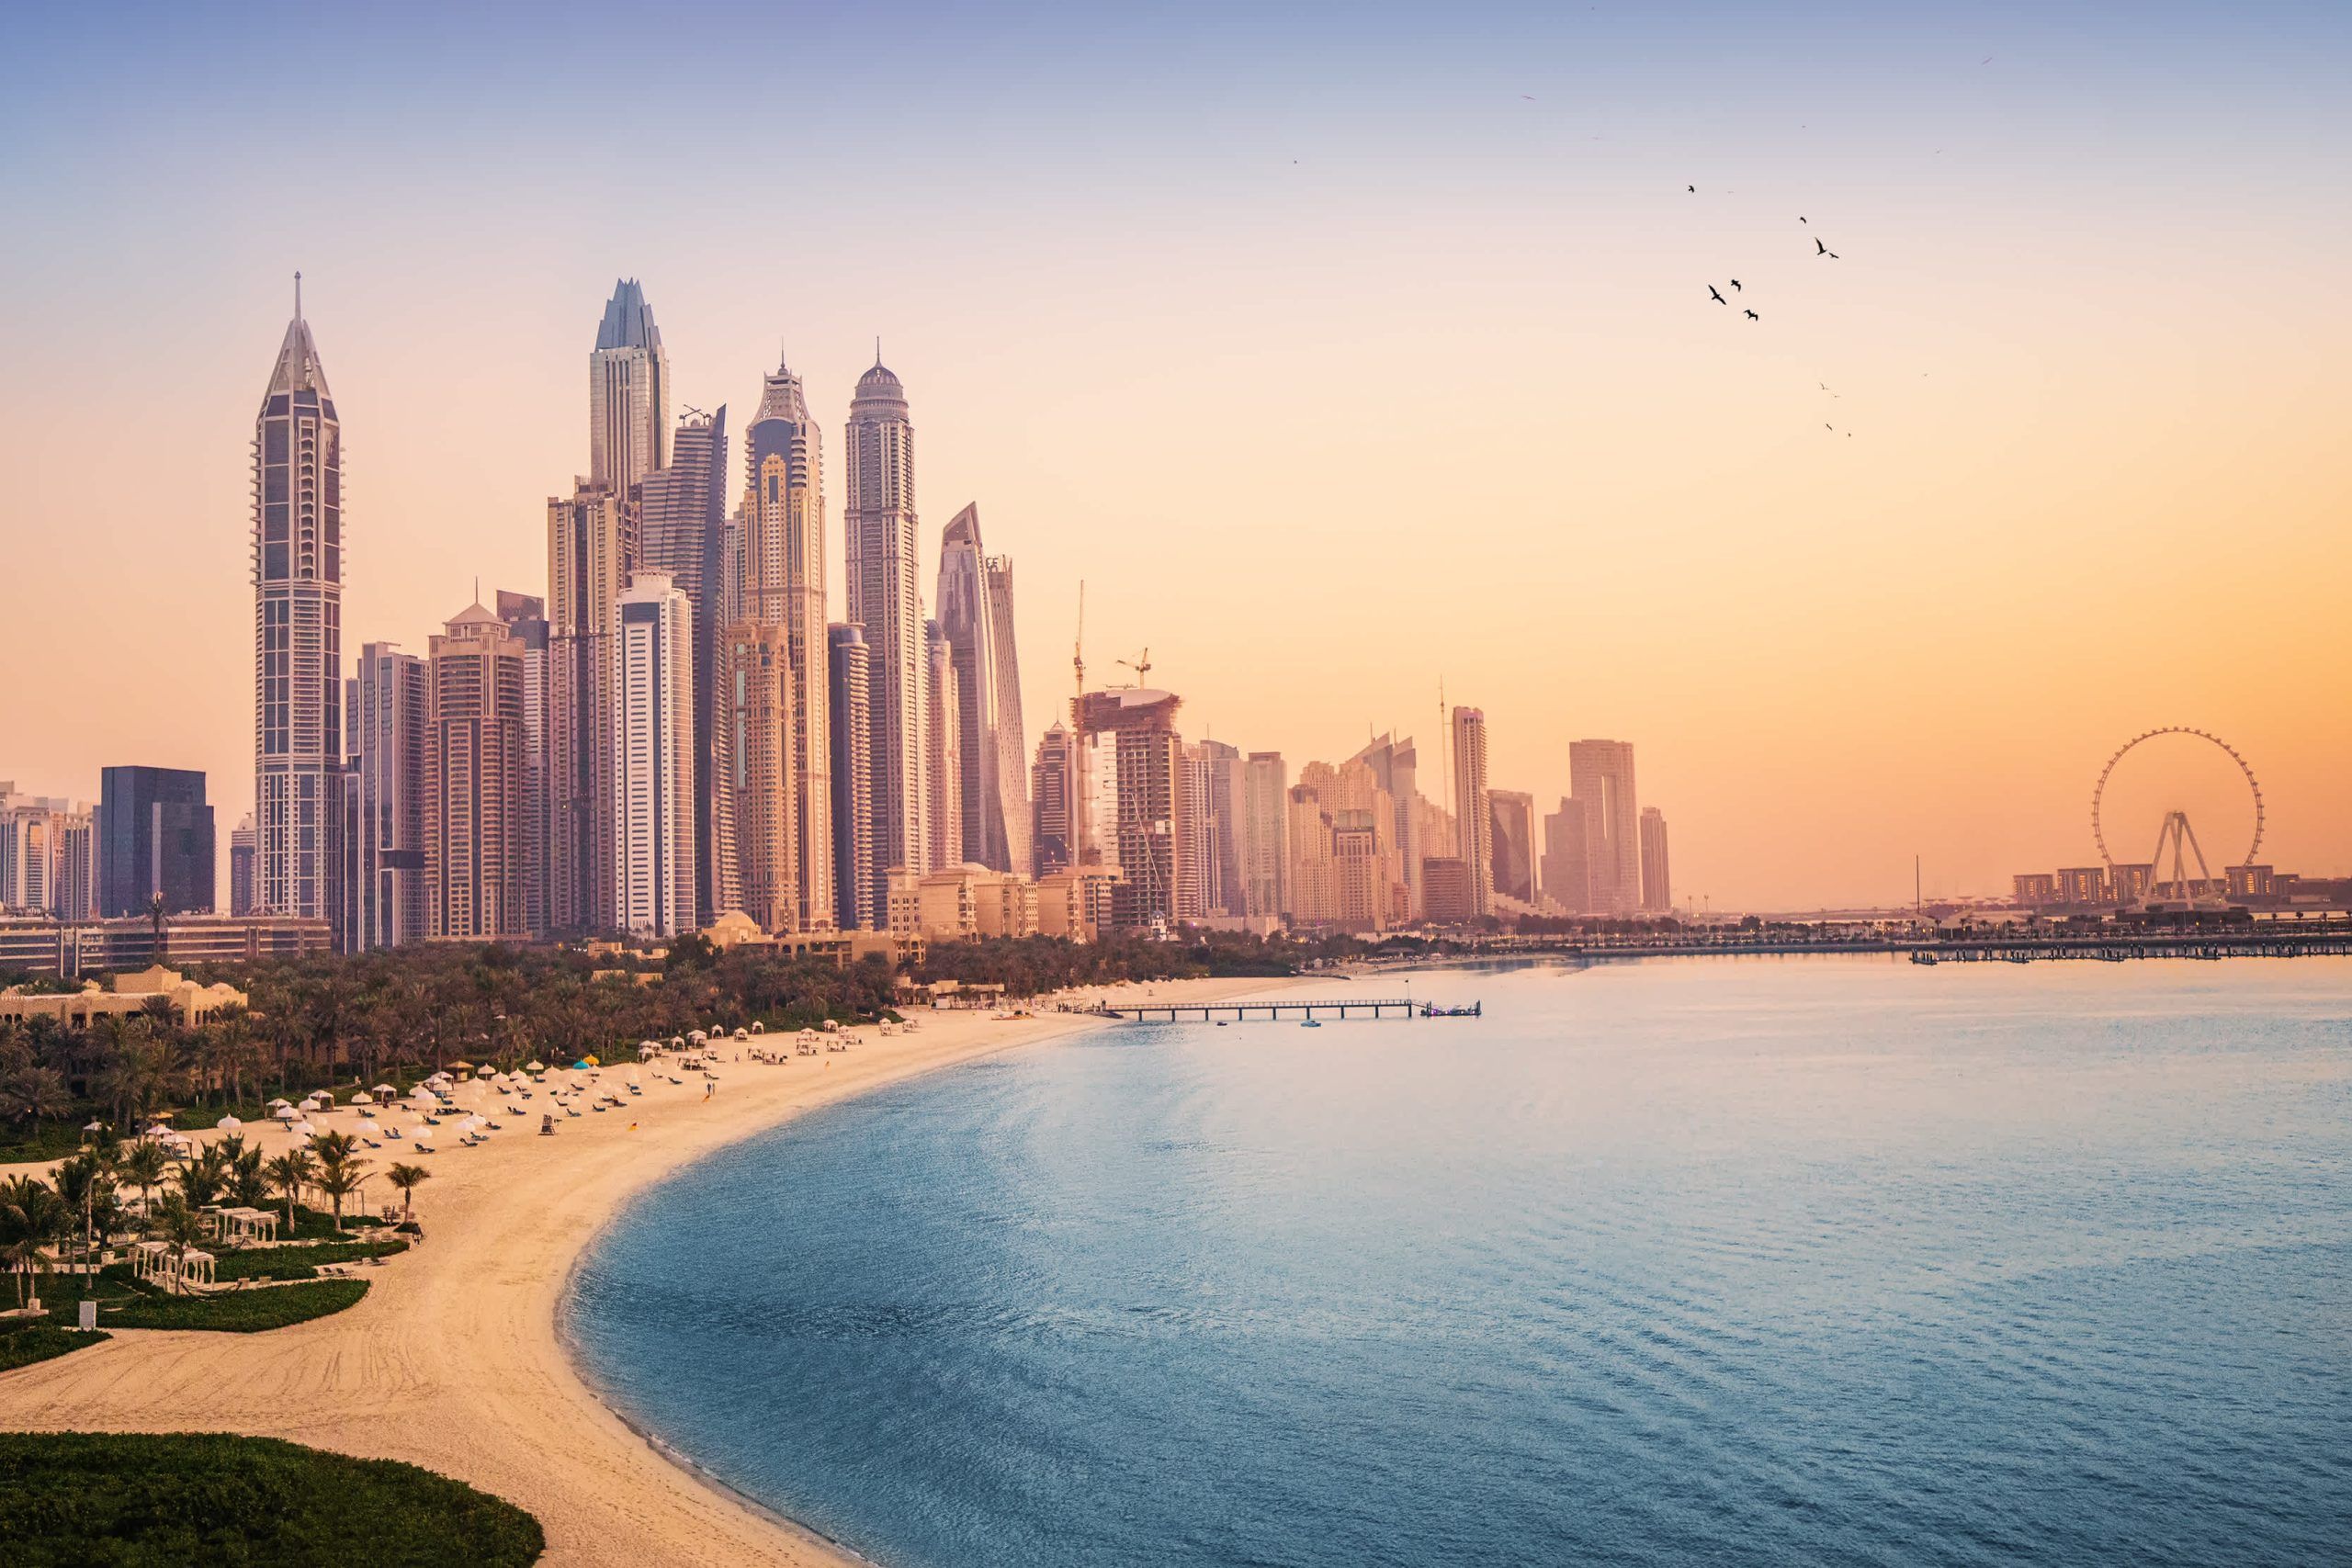 Off-plan недвижимость в Дубае: преимущества, риски и отличия от pre-launch